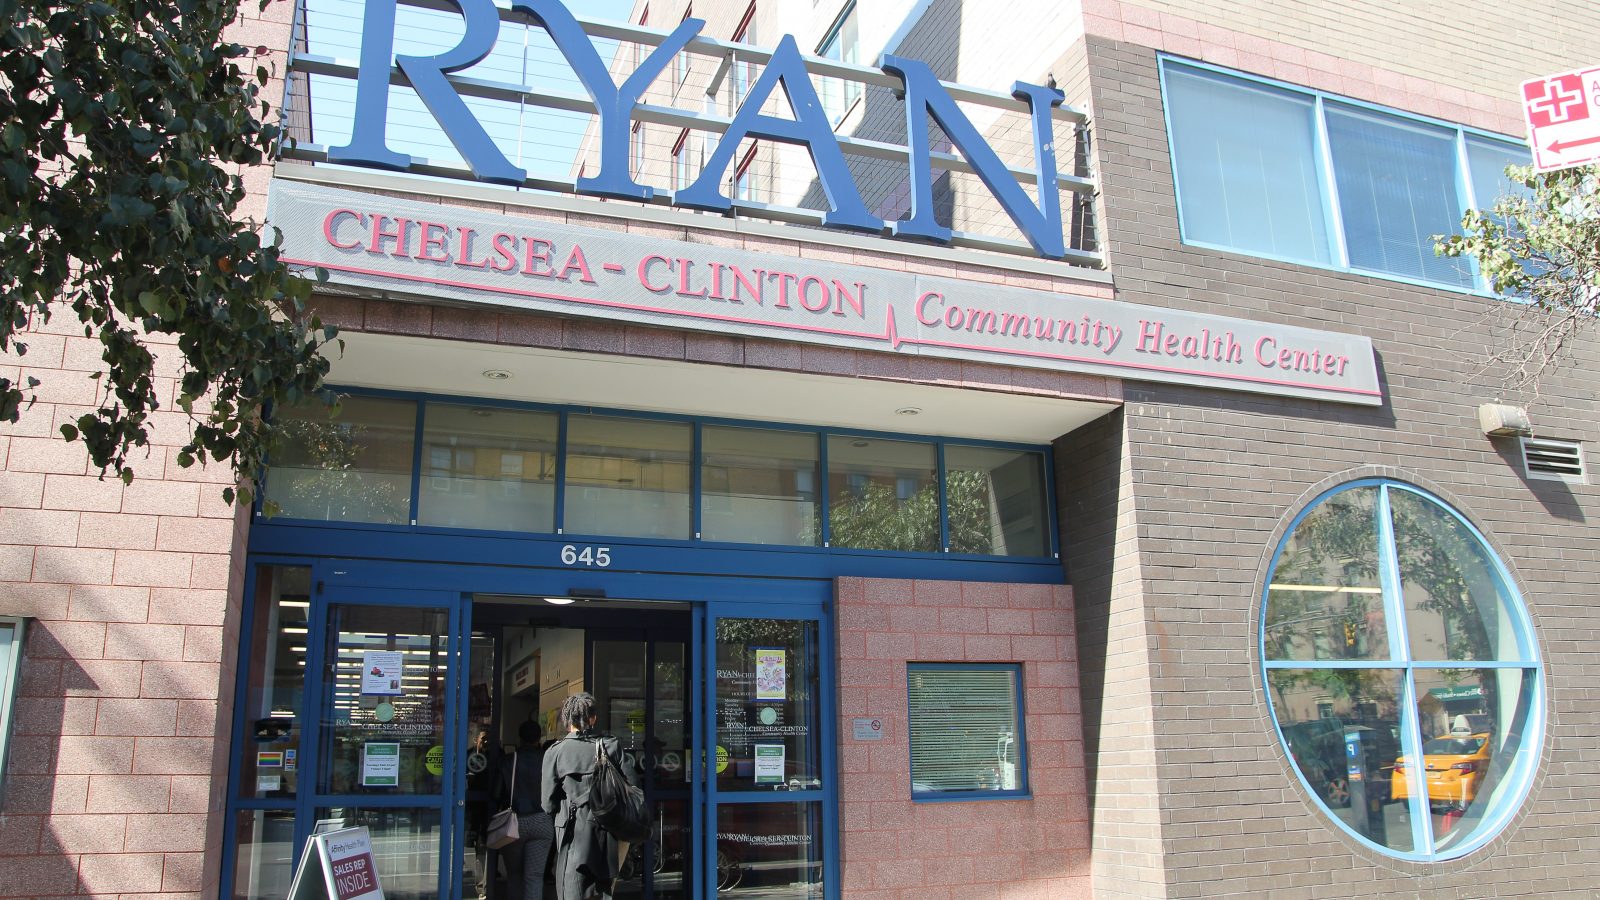 Ryan Chelsea-Clinton Community Health Center